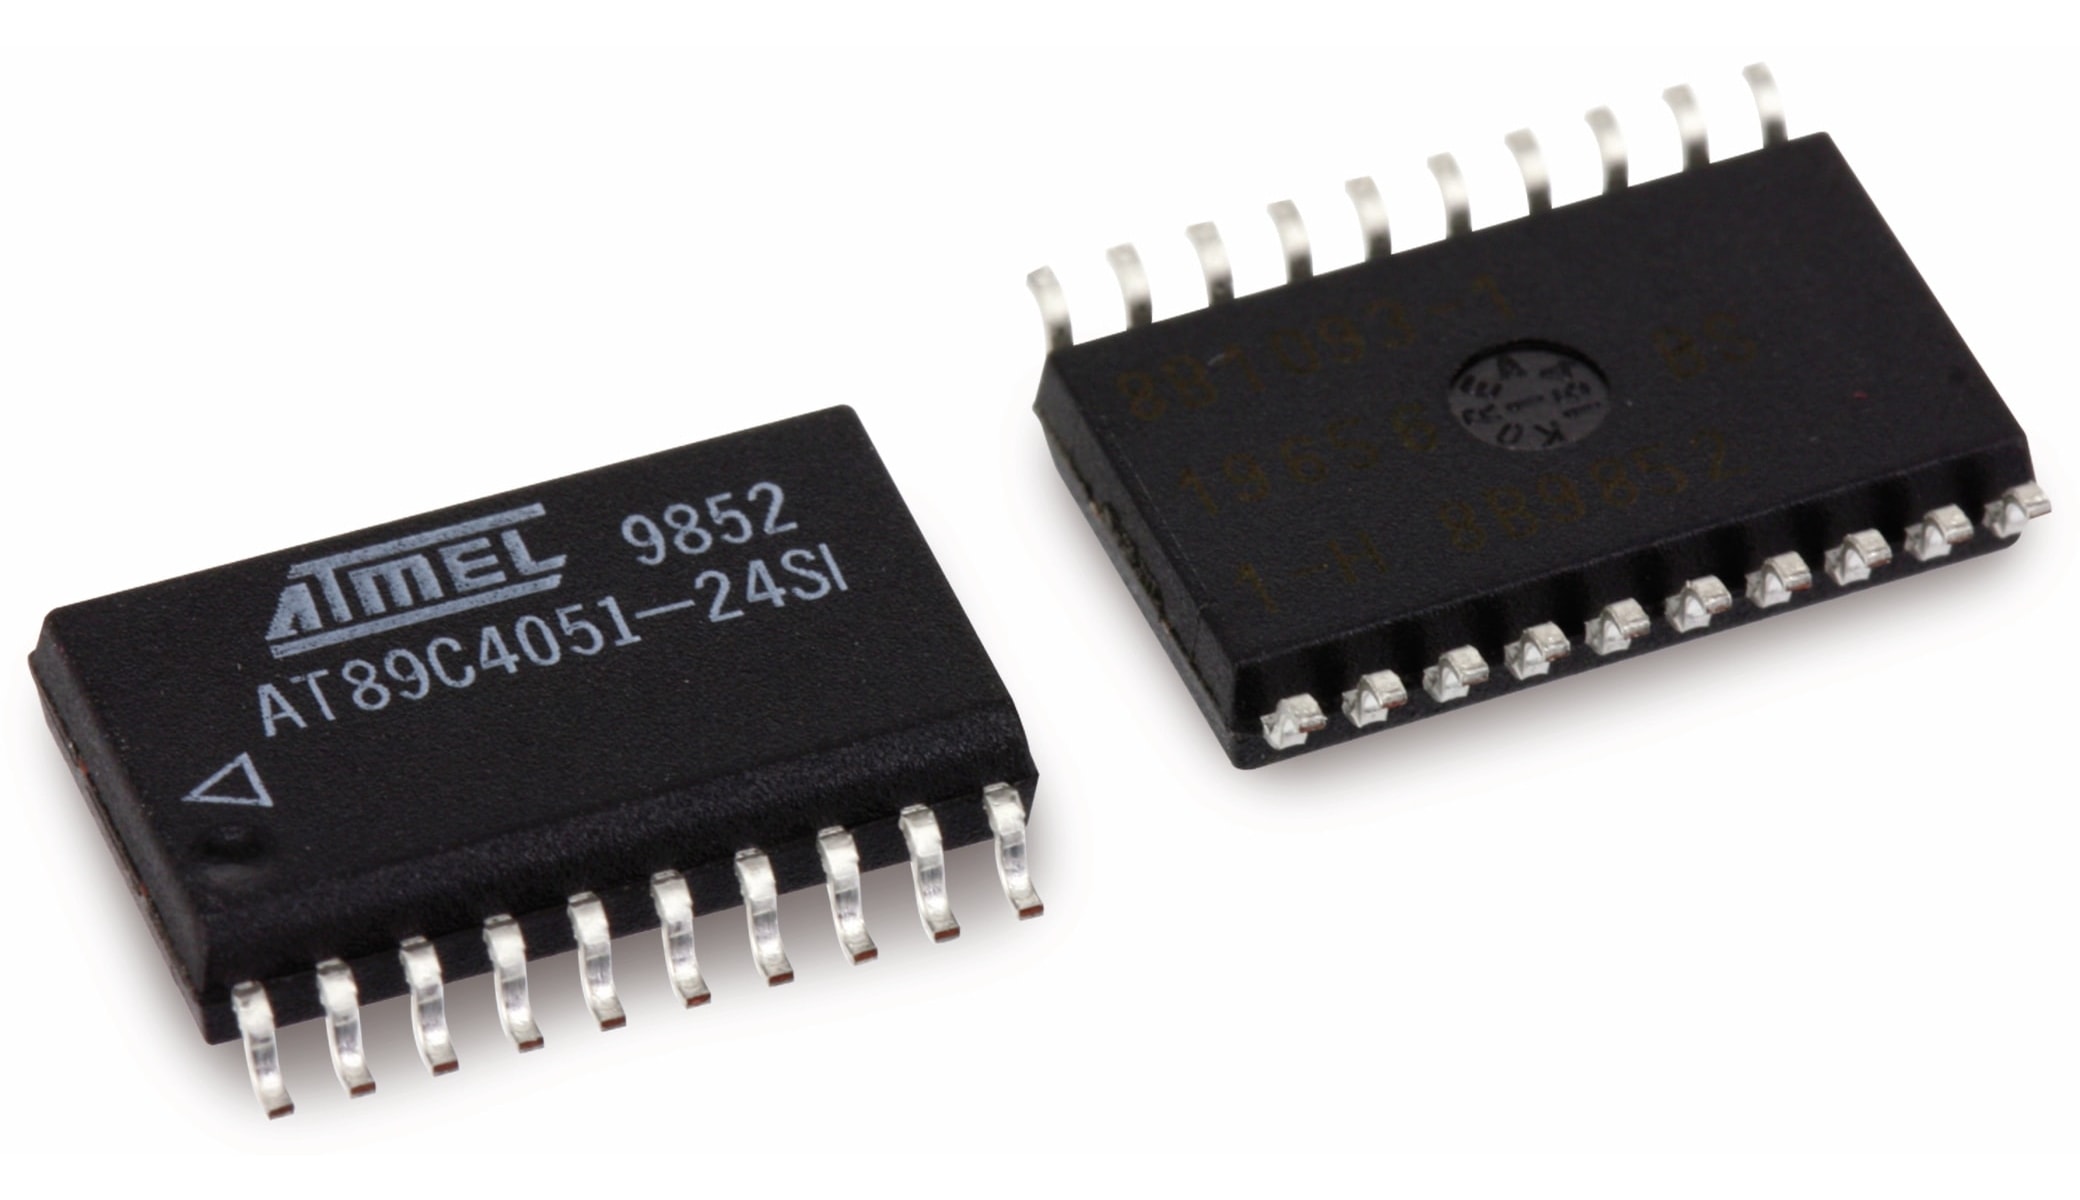 Atmel Microcontroller AT89C4051-24SI